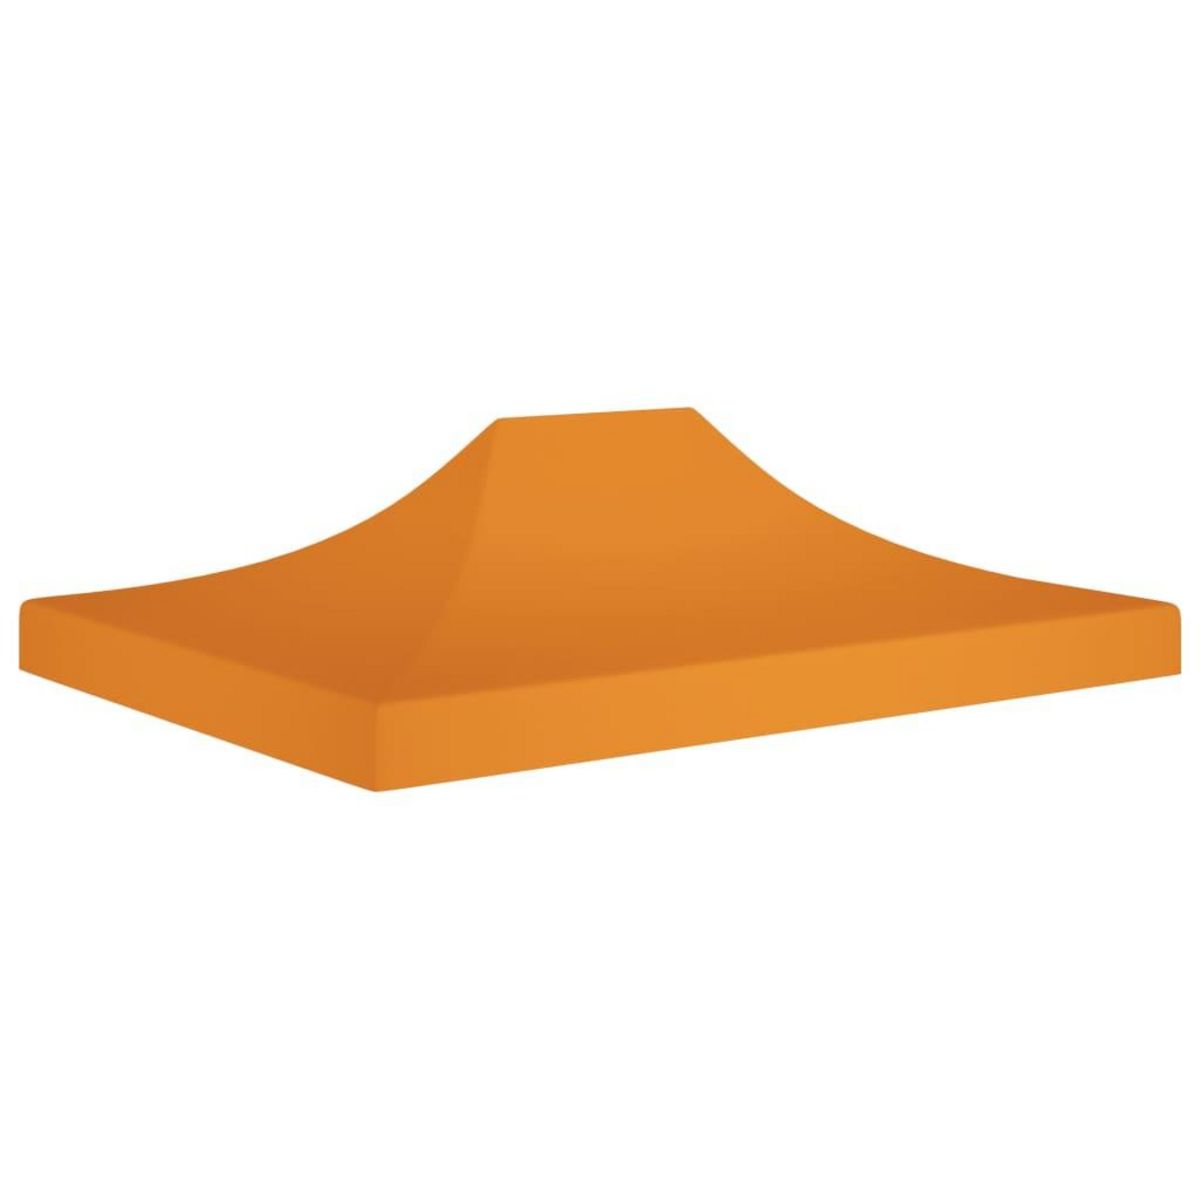 VIDAXL Toit de tente de reception 4x3 m Orange 270 g/m^2